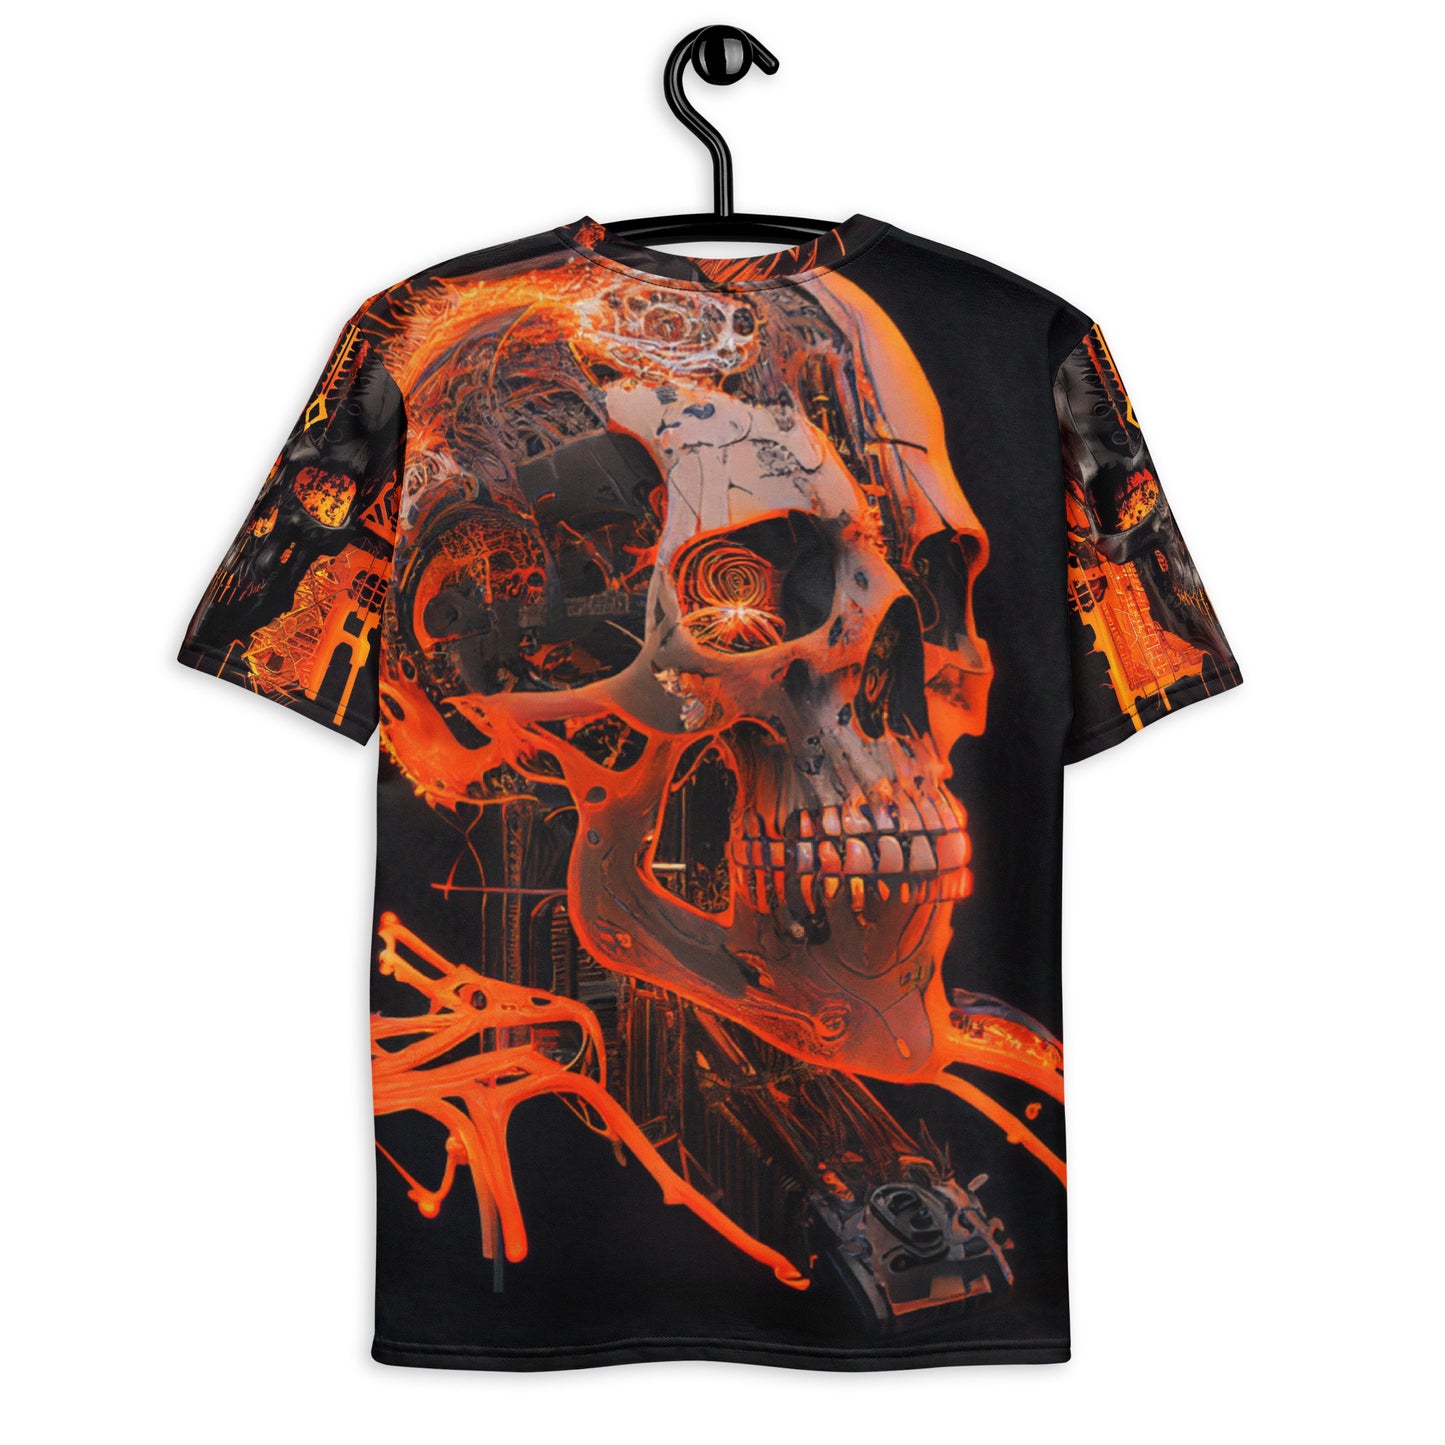 Acid Skulls 01 Men's t-shirt - Djungle Fever